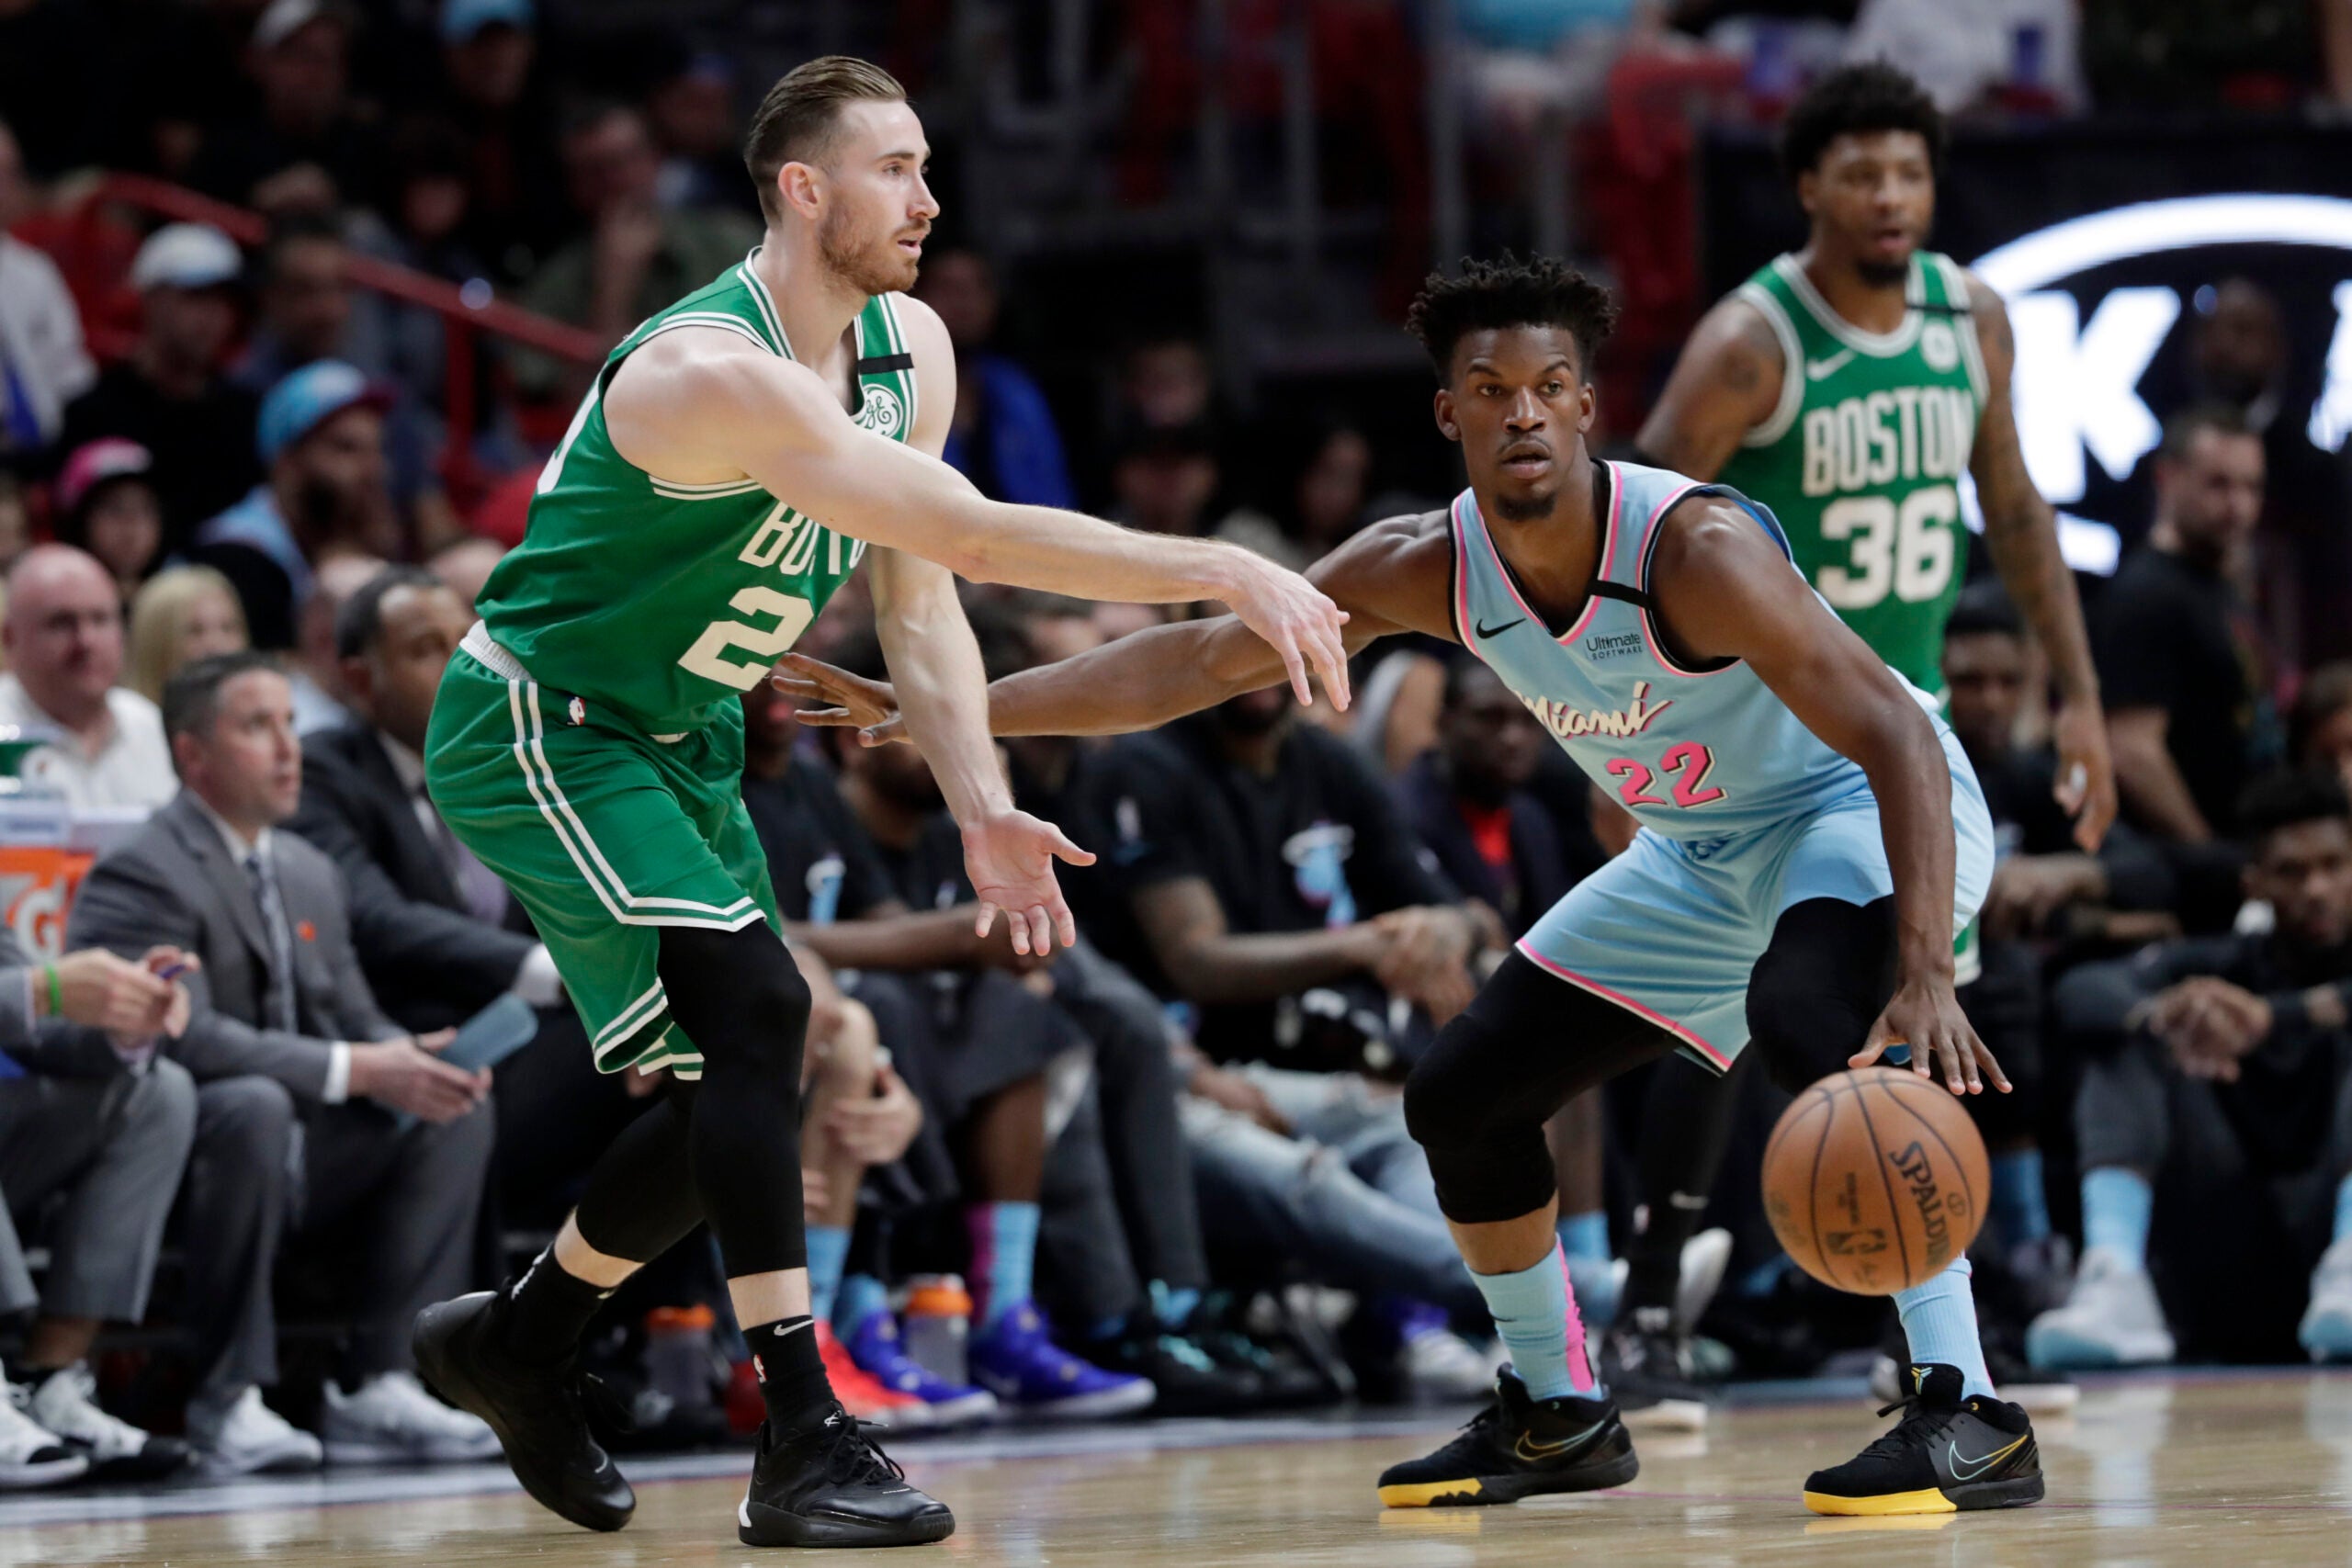 The respect affair between Kobe Bryant and the Boston Celtics